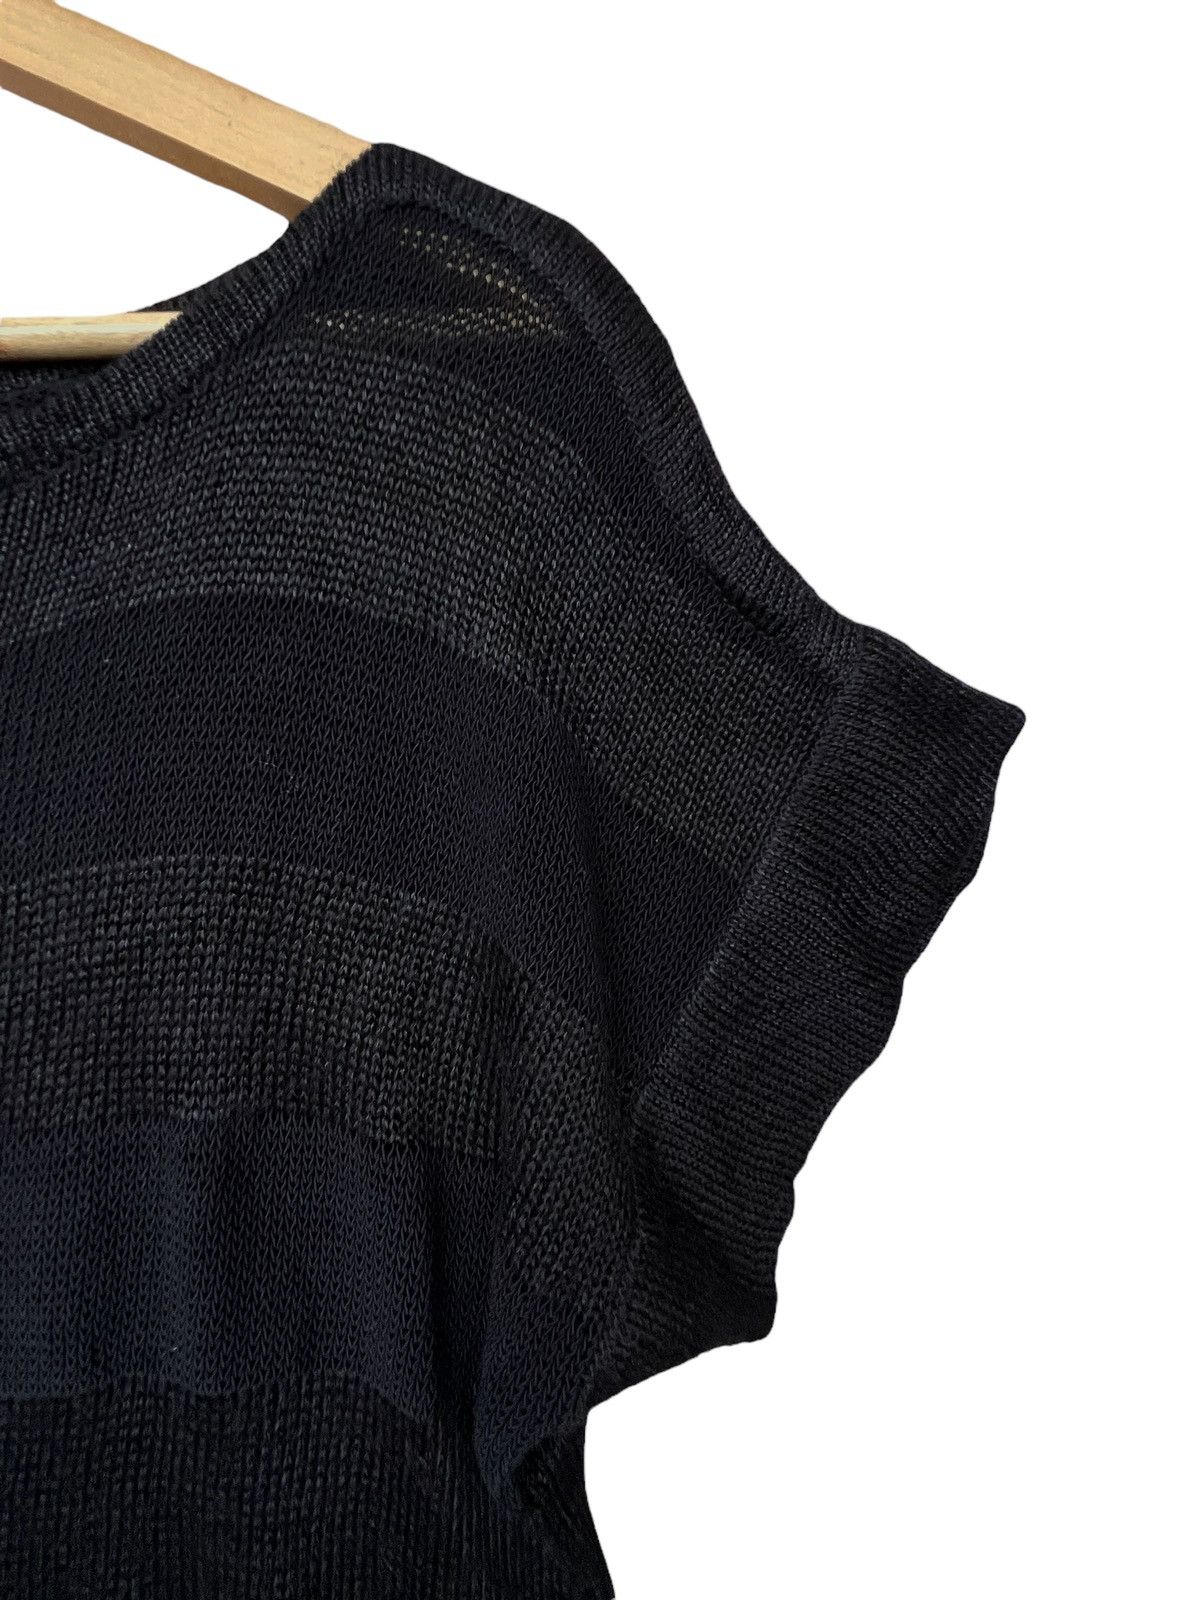 Christian Dior Knitwear Short Sleeve - 3